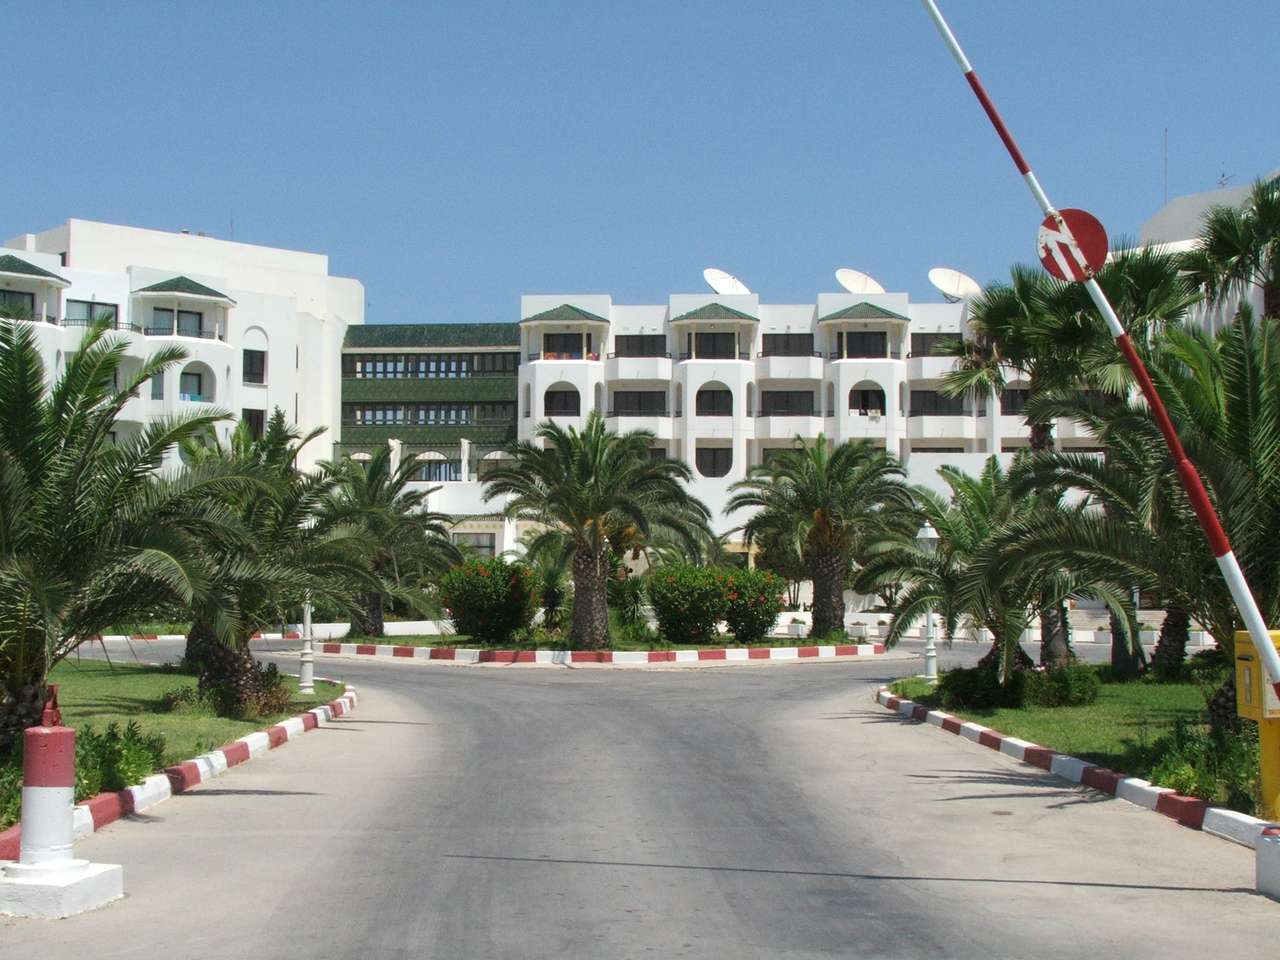 Отель в Тунисе пазл онлайн